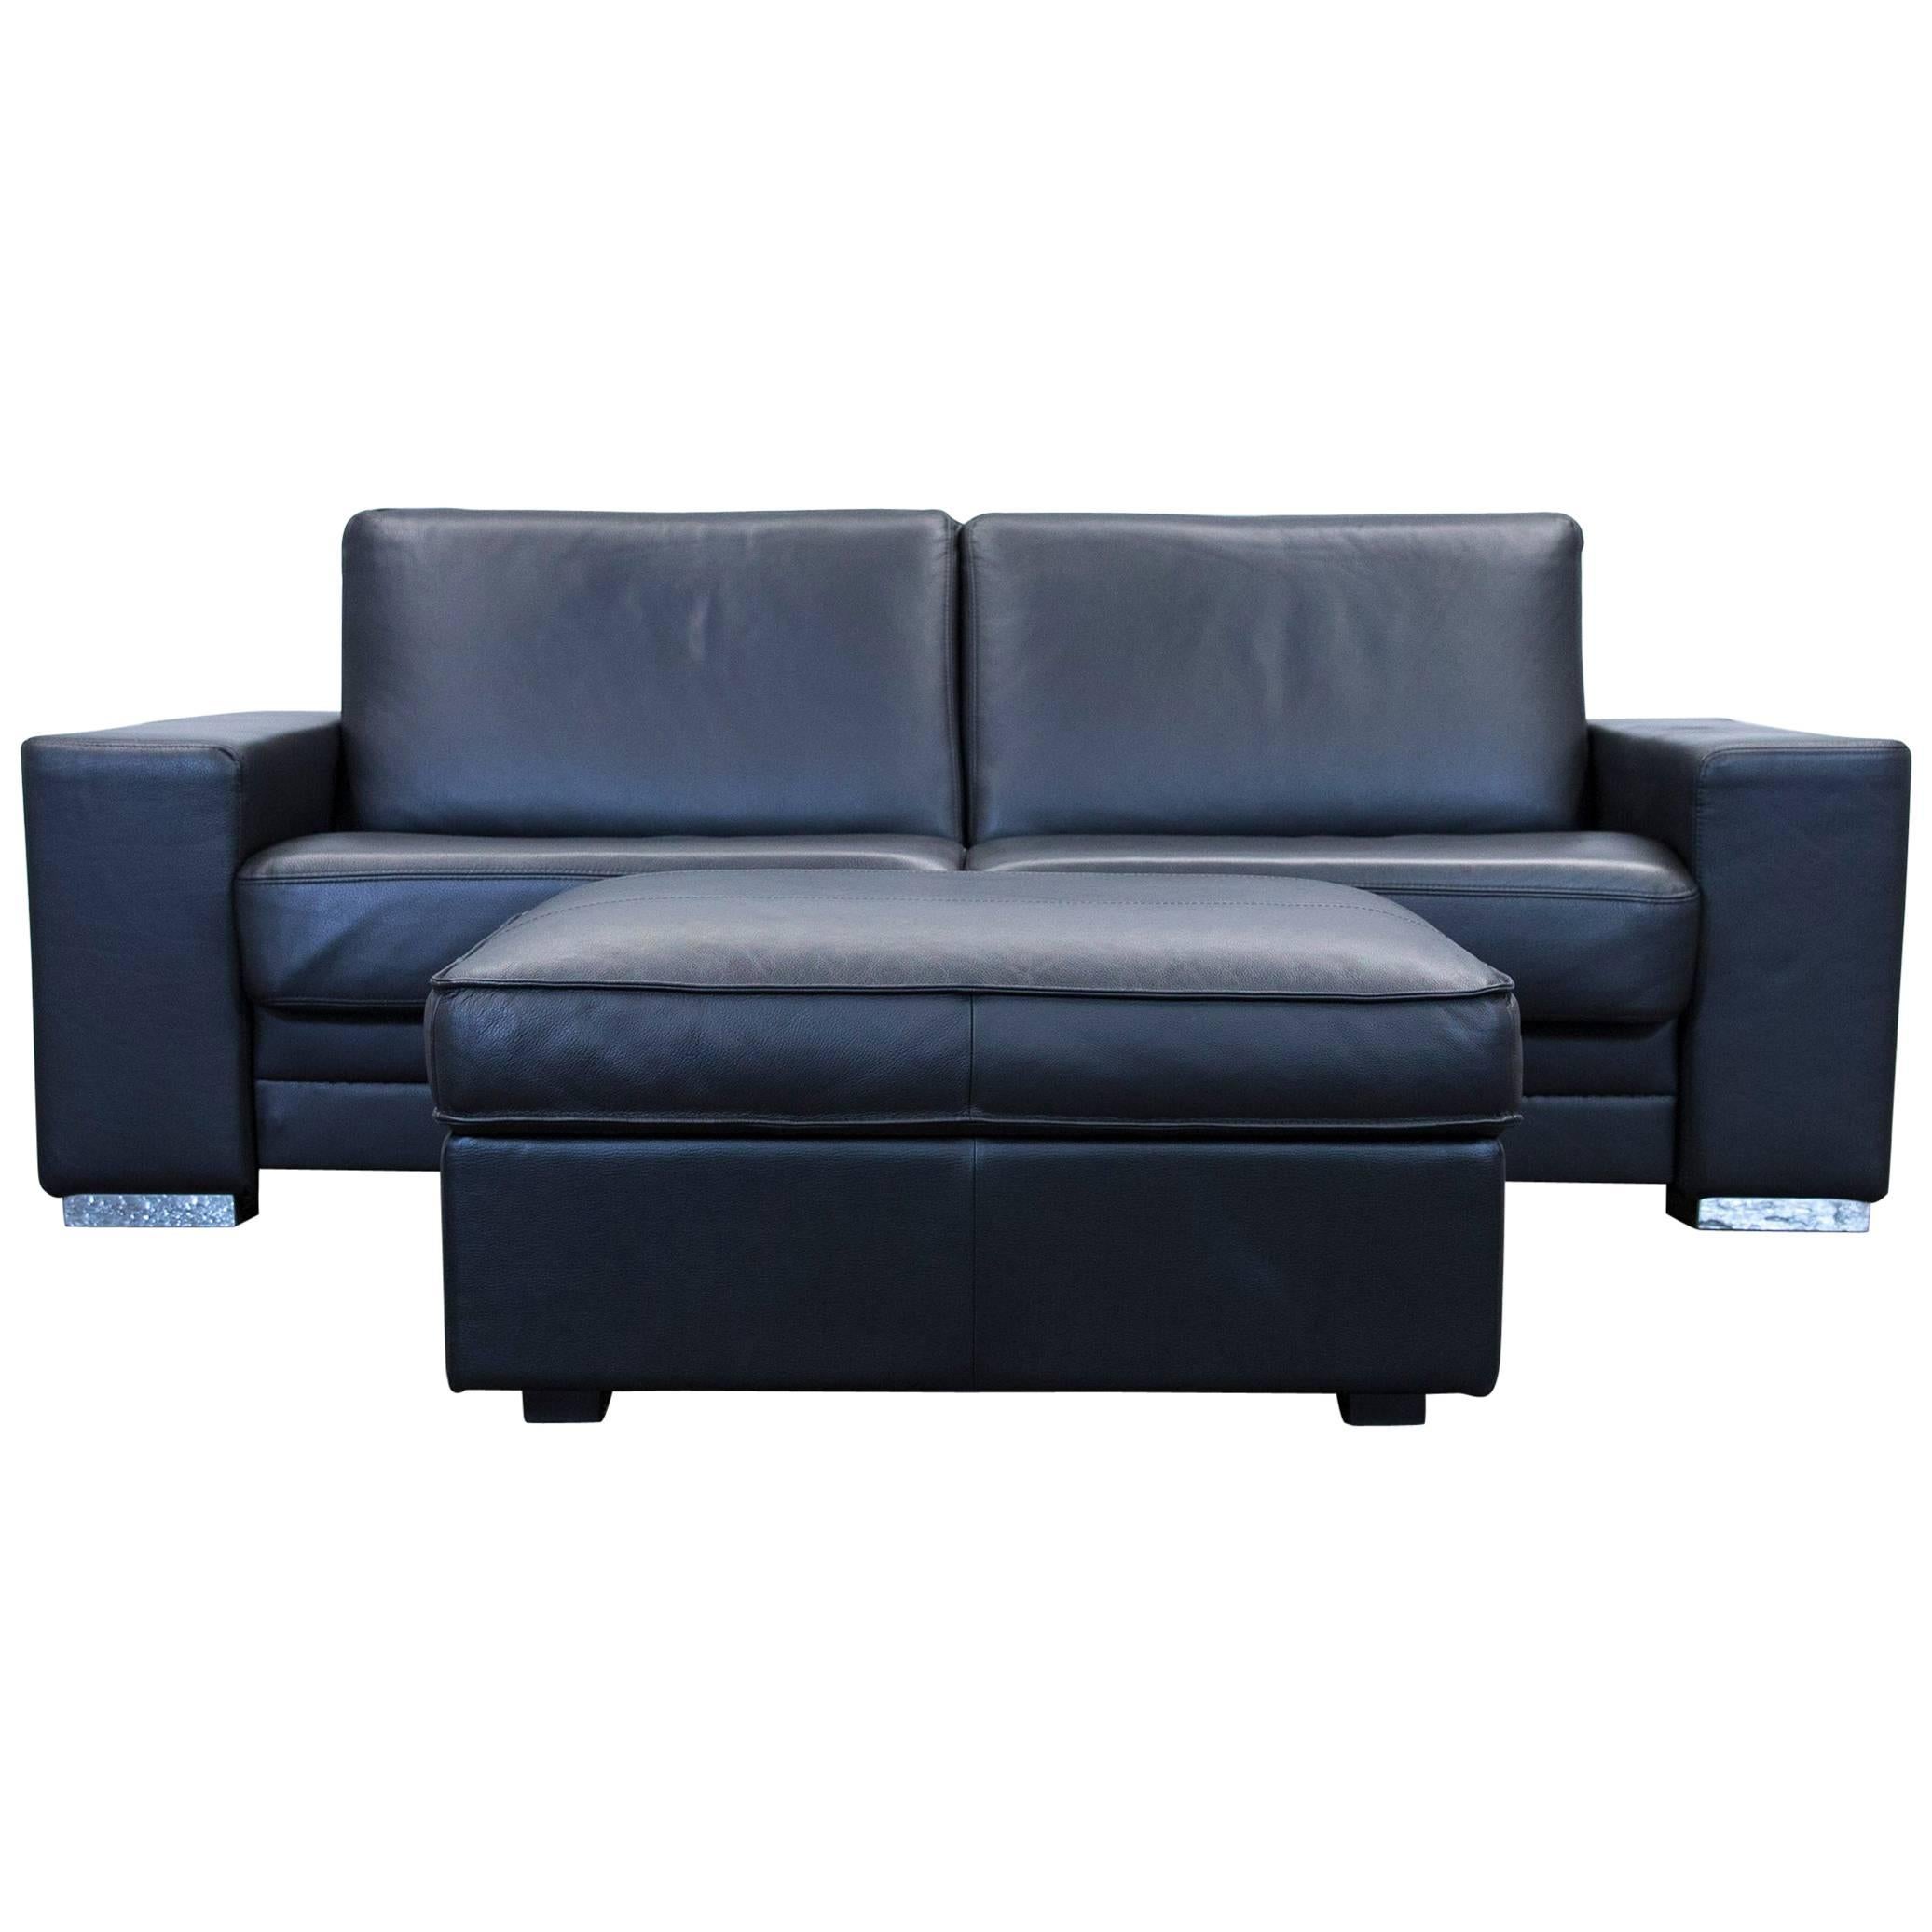 Designer Sleepsofa Set Leather Black Function Couch Topper Modern Footstool